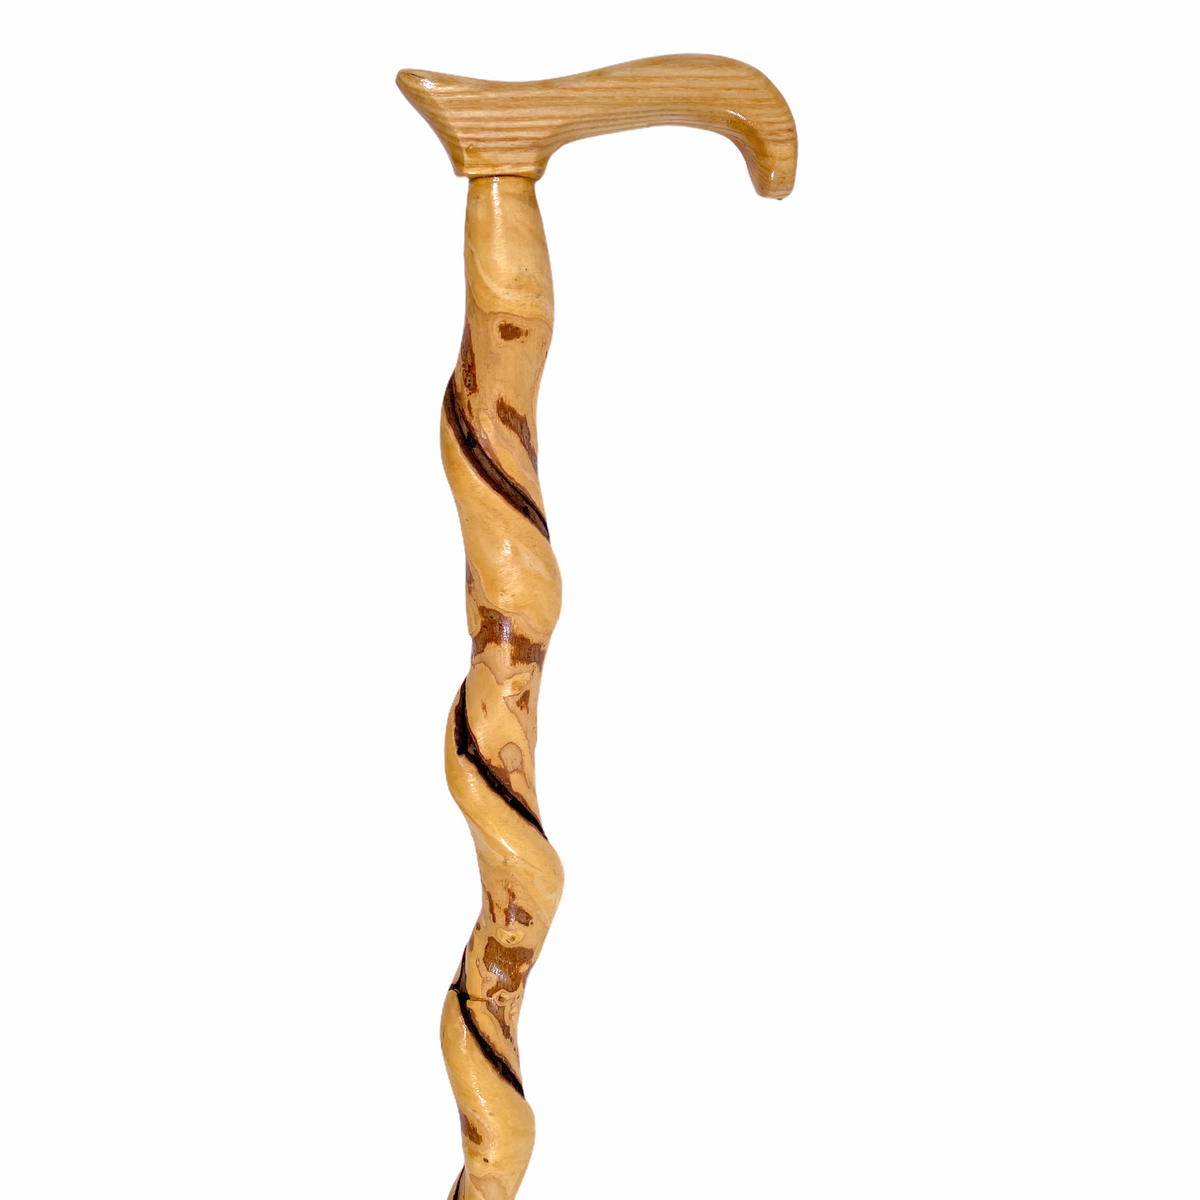 Natural Spiral Vine Twisted Wood Walking Cane - 38.5